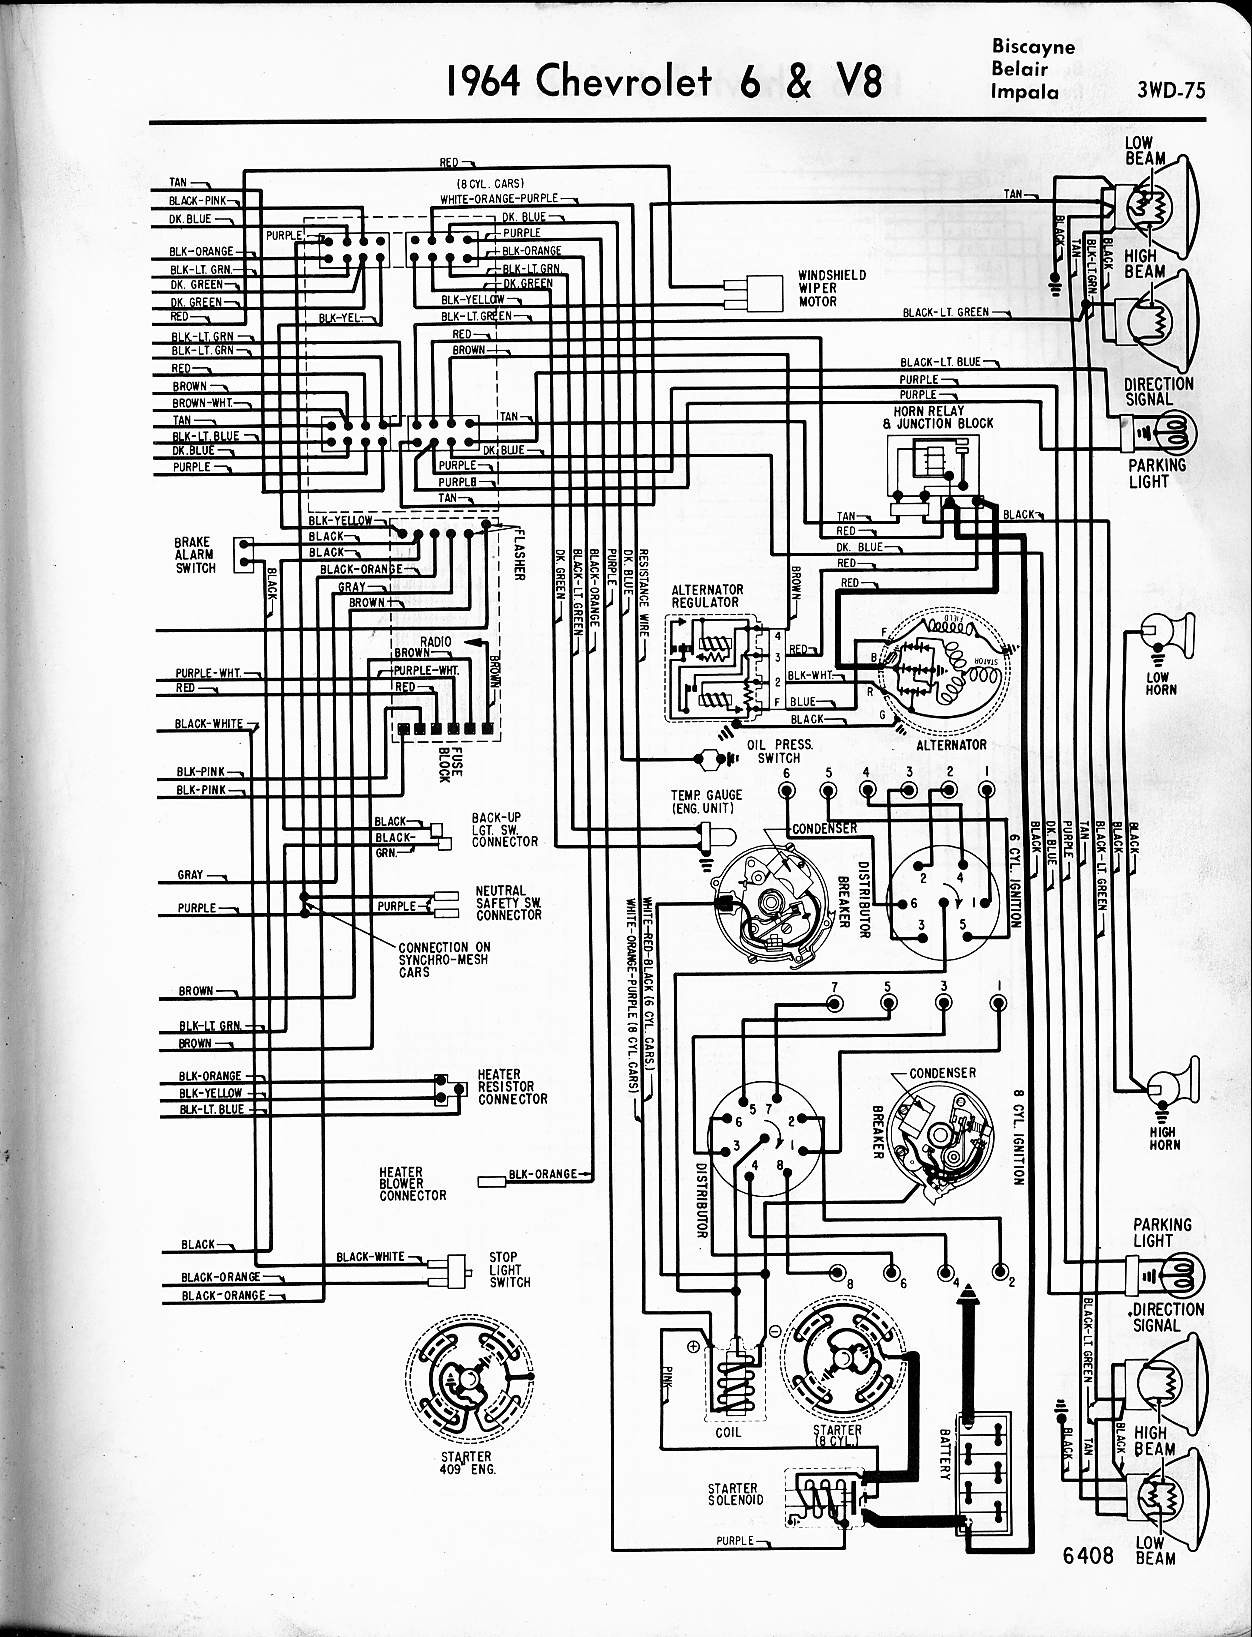 2001 Chevy Impala Engine Diagram 57 65 Chevy Wiring Diagrams Of 2001 Chevy Impala Engine Diagram